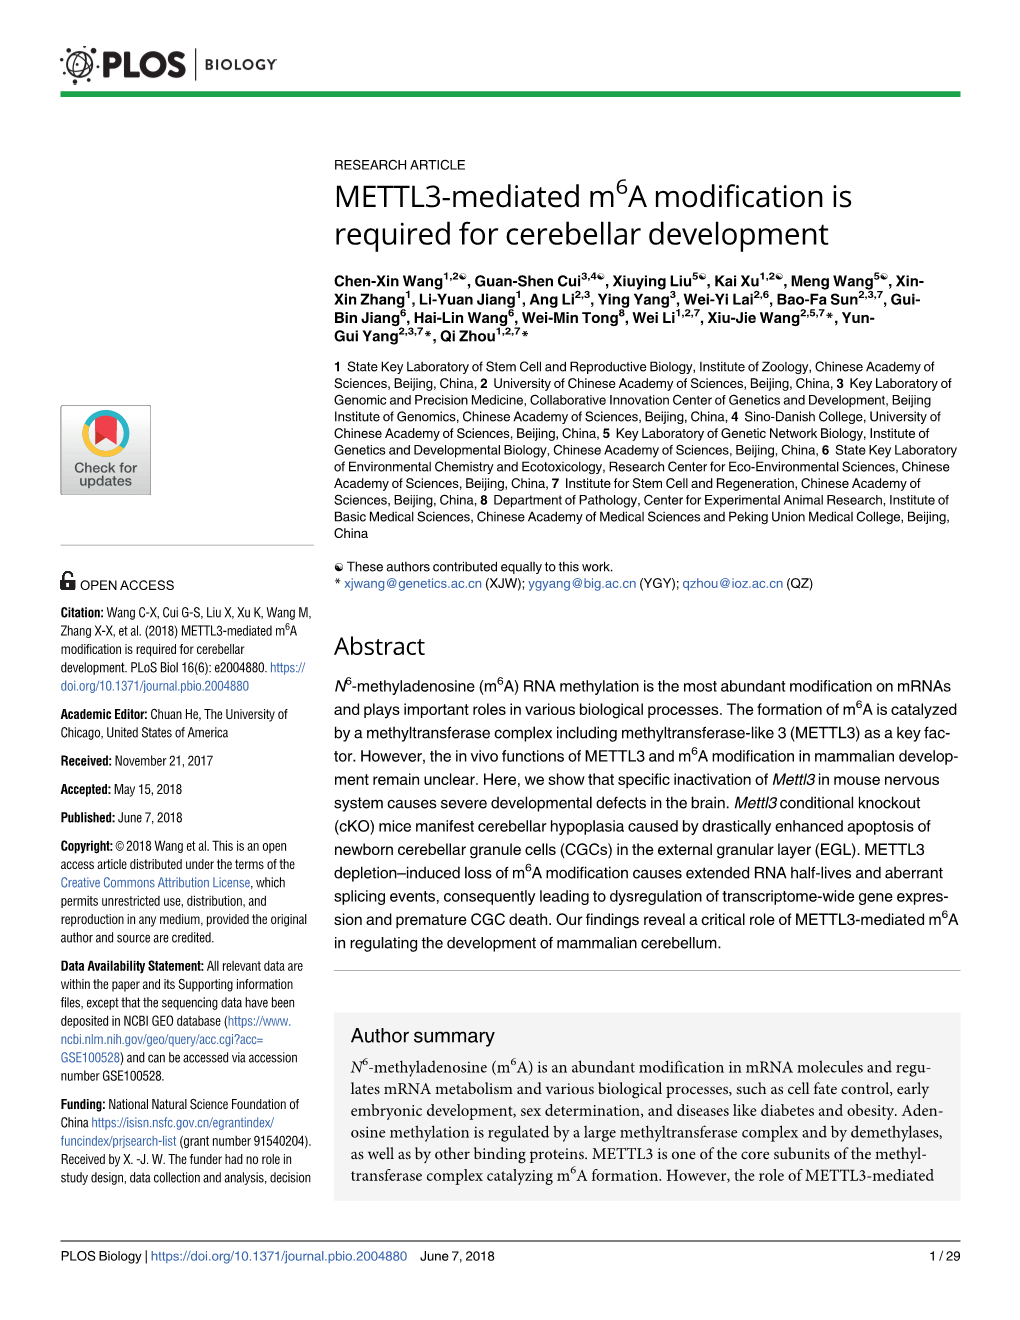 METTL3-Mediated M6a Modification Is Required for Cerebellar Development